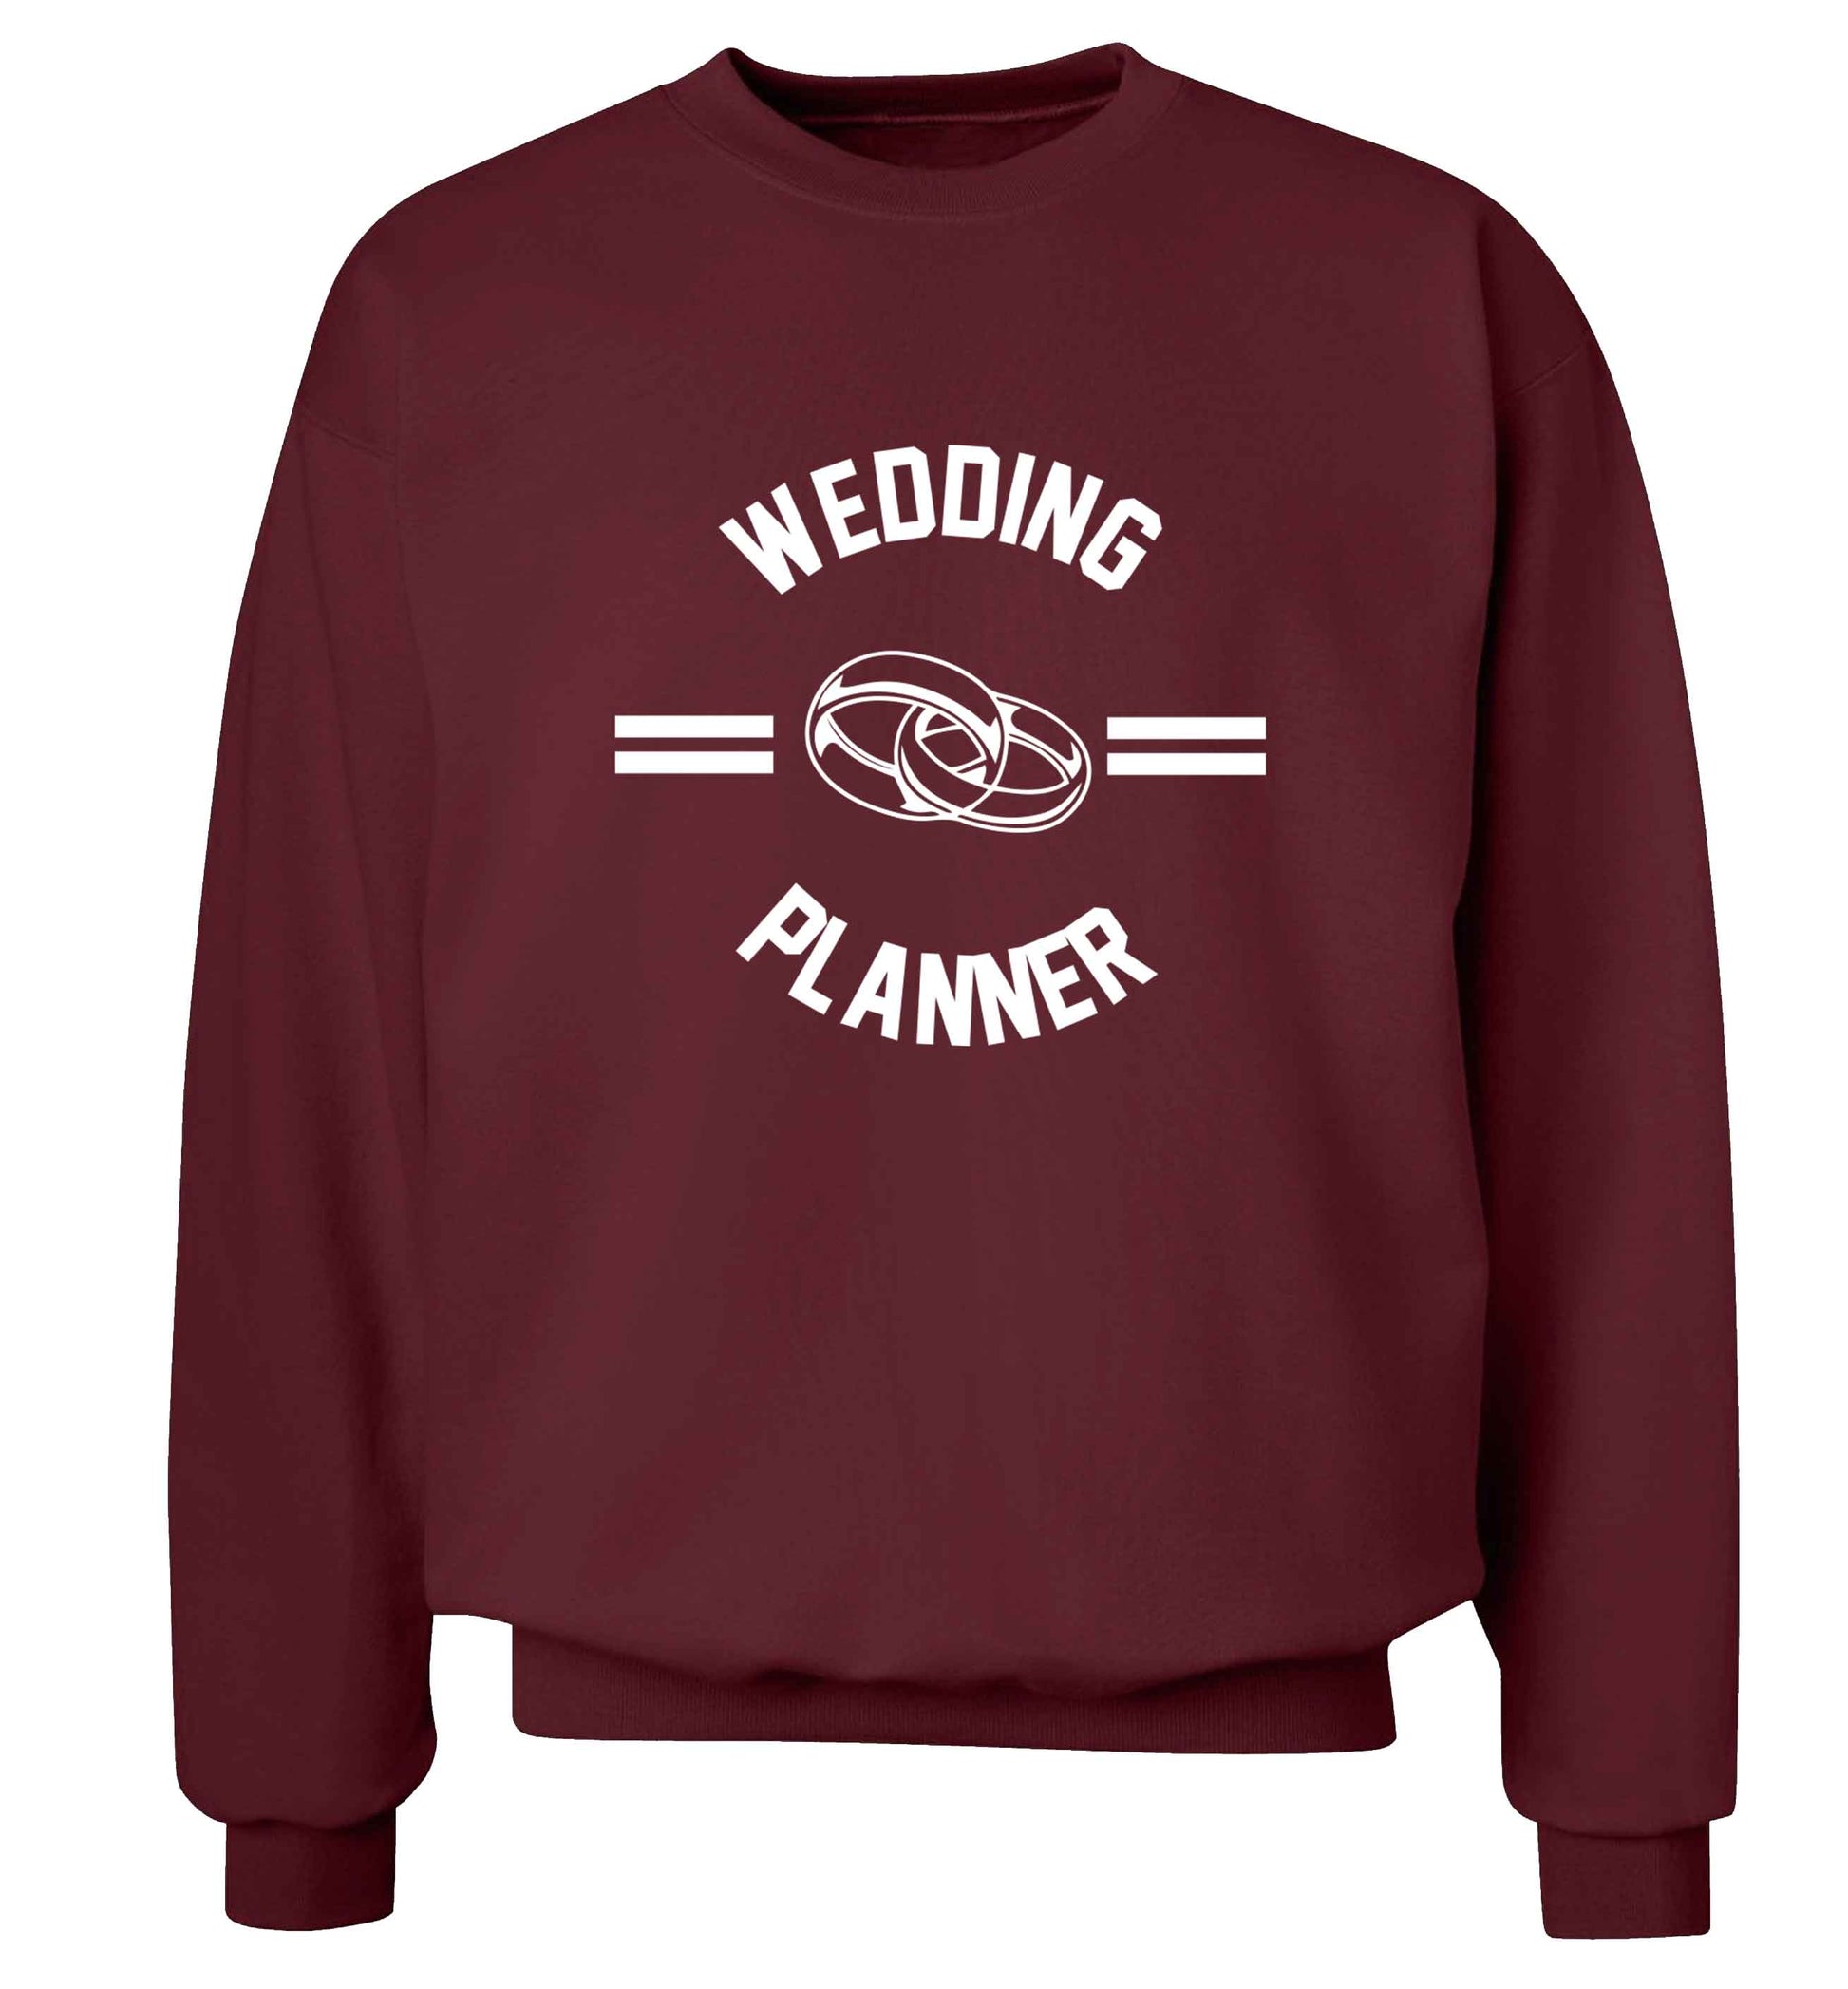 Wedding planner adult's unisex maroon sweater 2XL